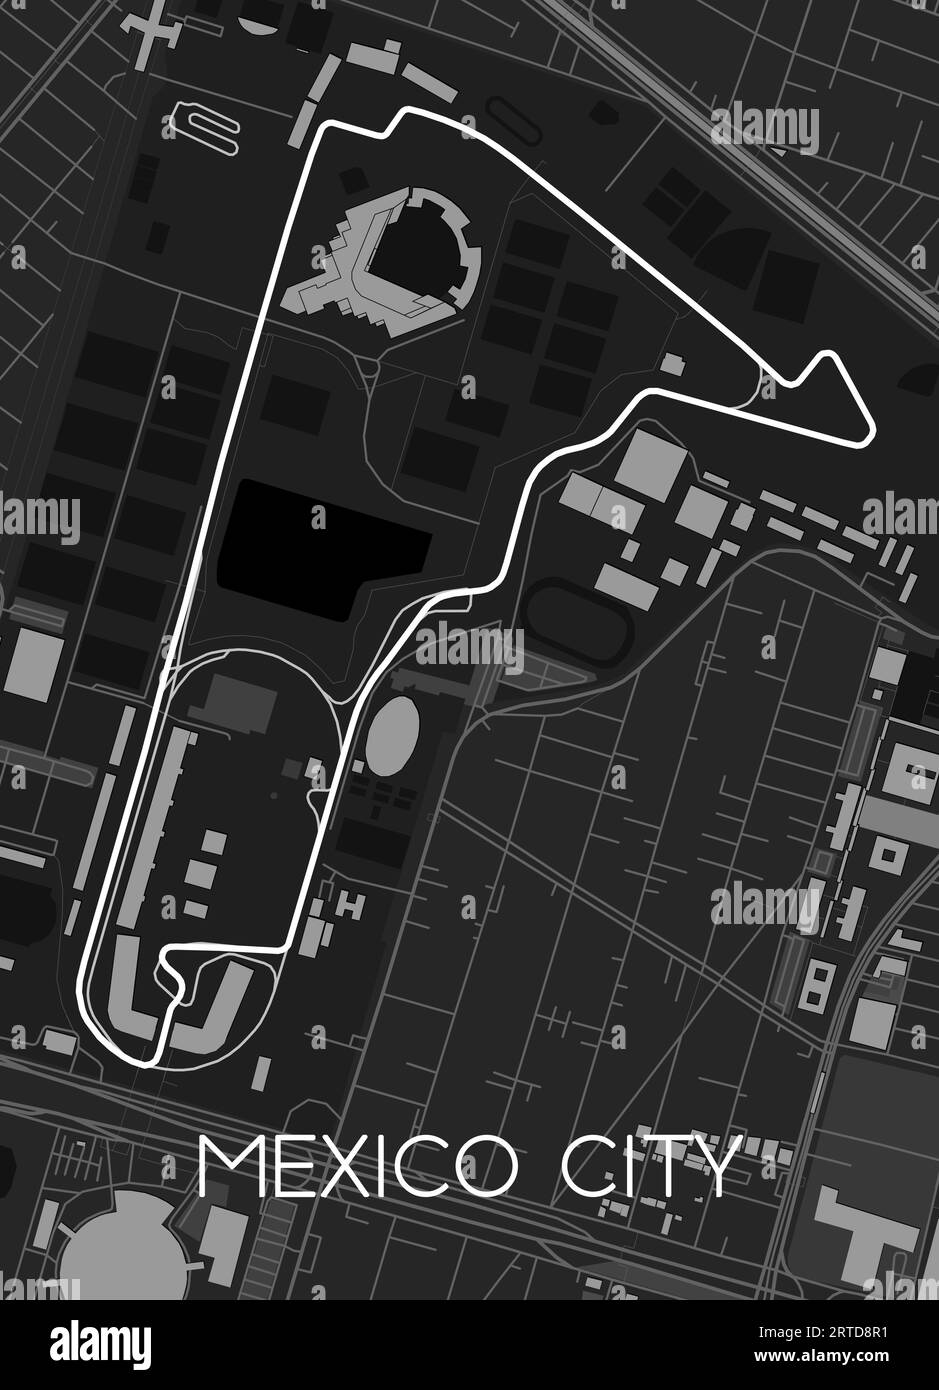 Autódromo Hermanos Rodríguez, Mexico City Track Map Illustrazione Vettoriale